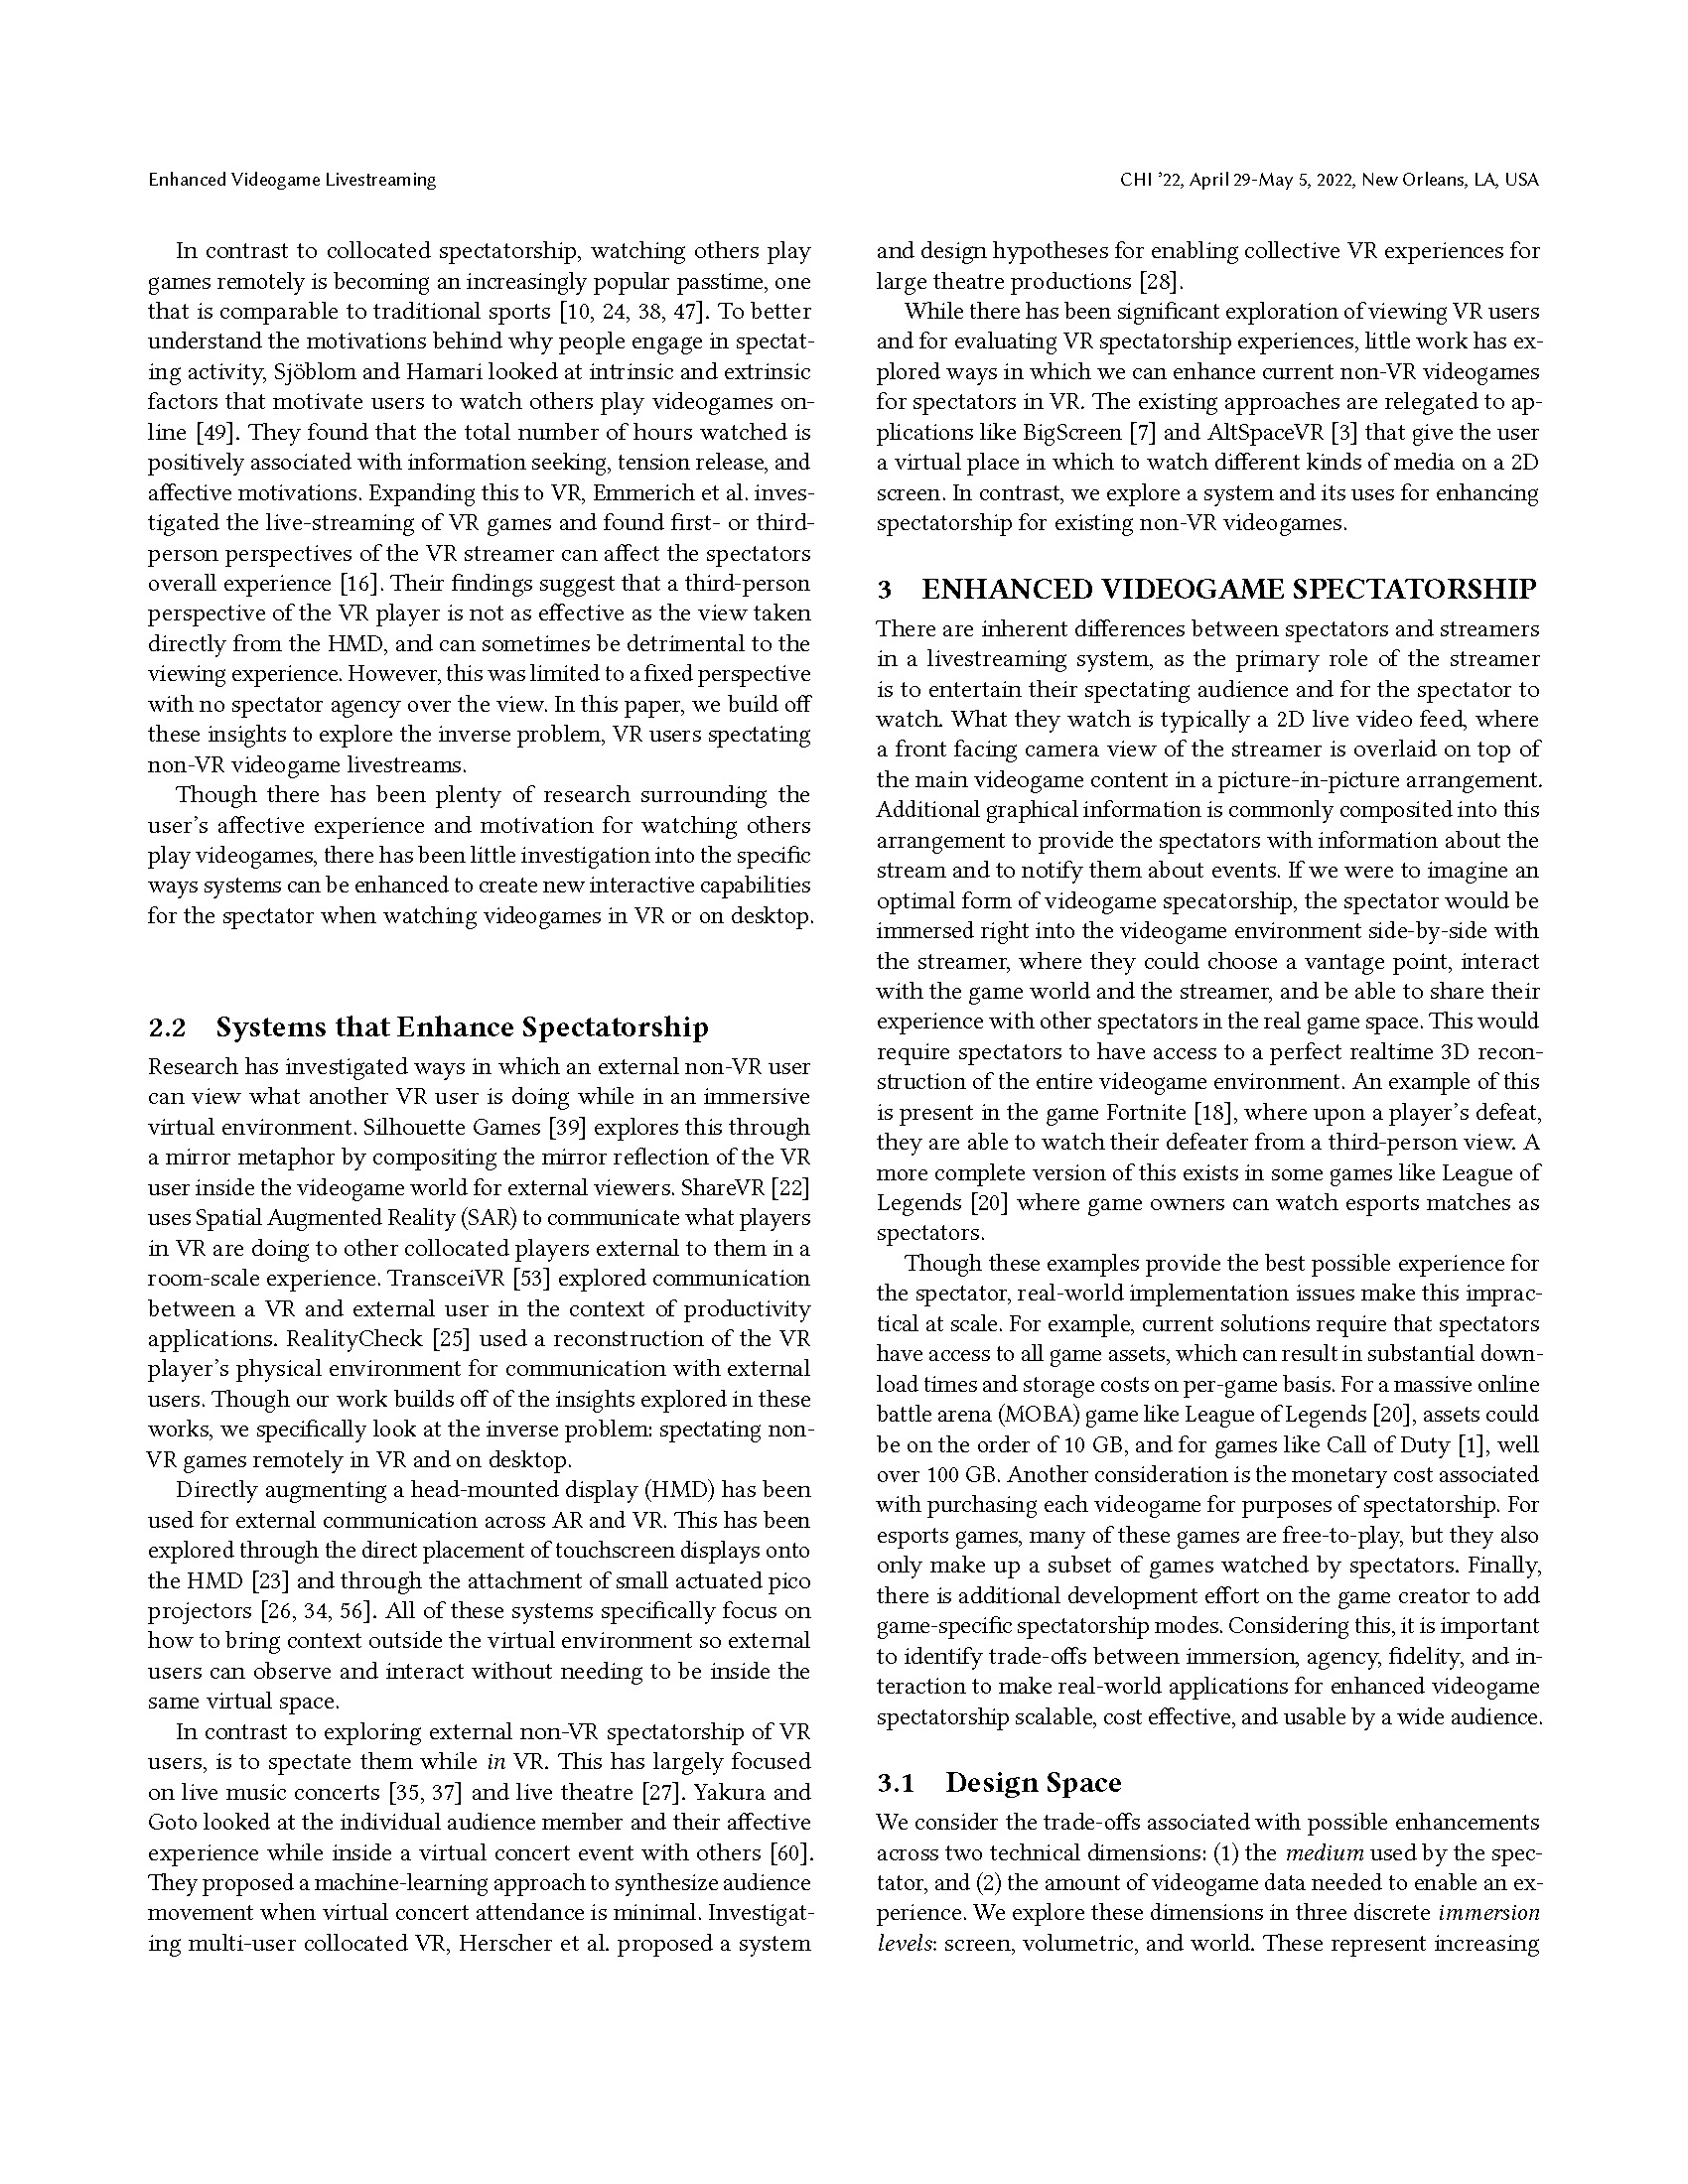 Download AAR Paper in pdf